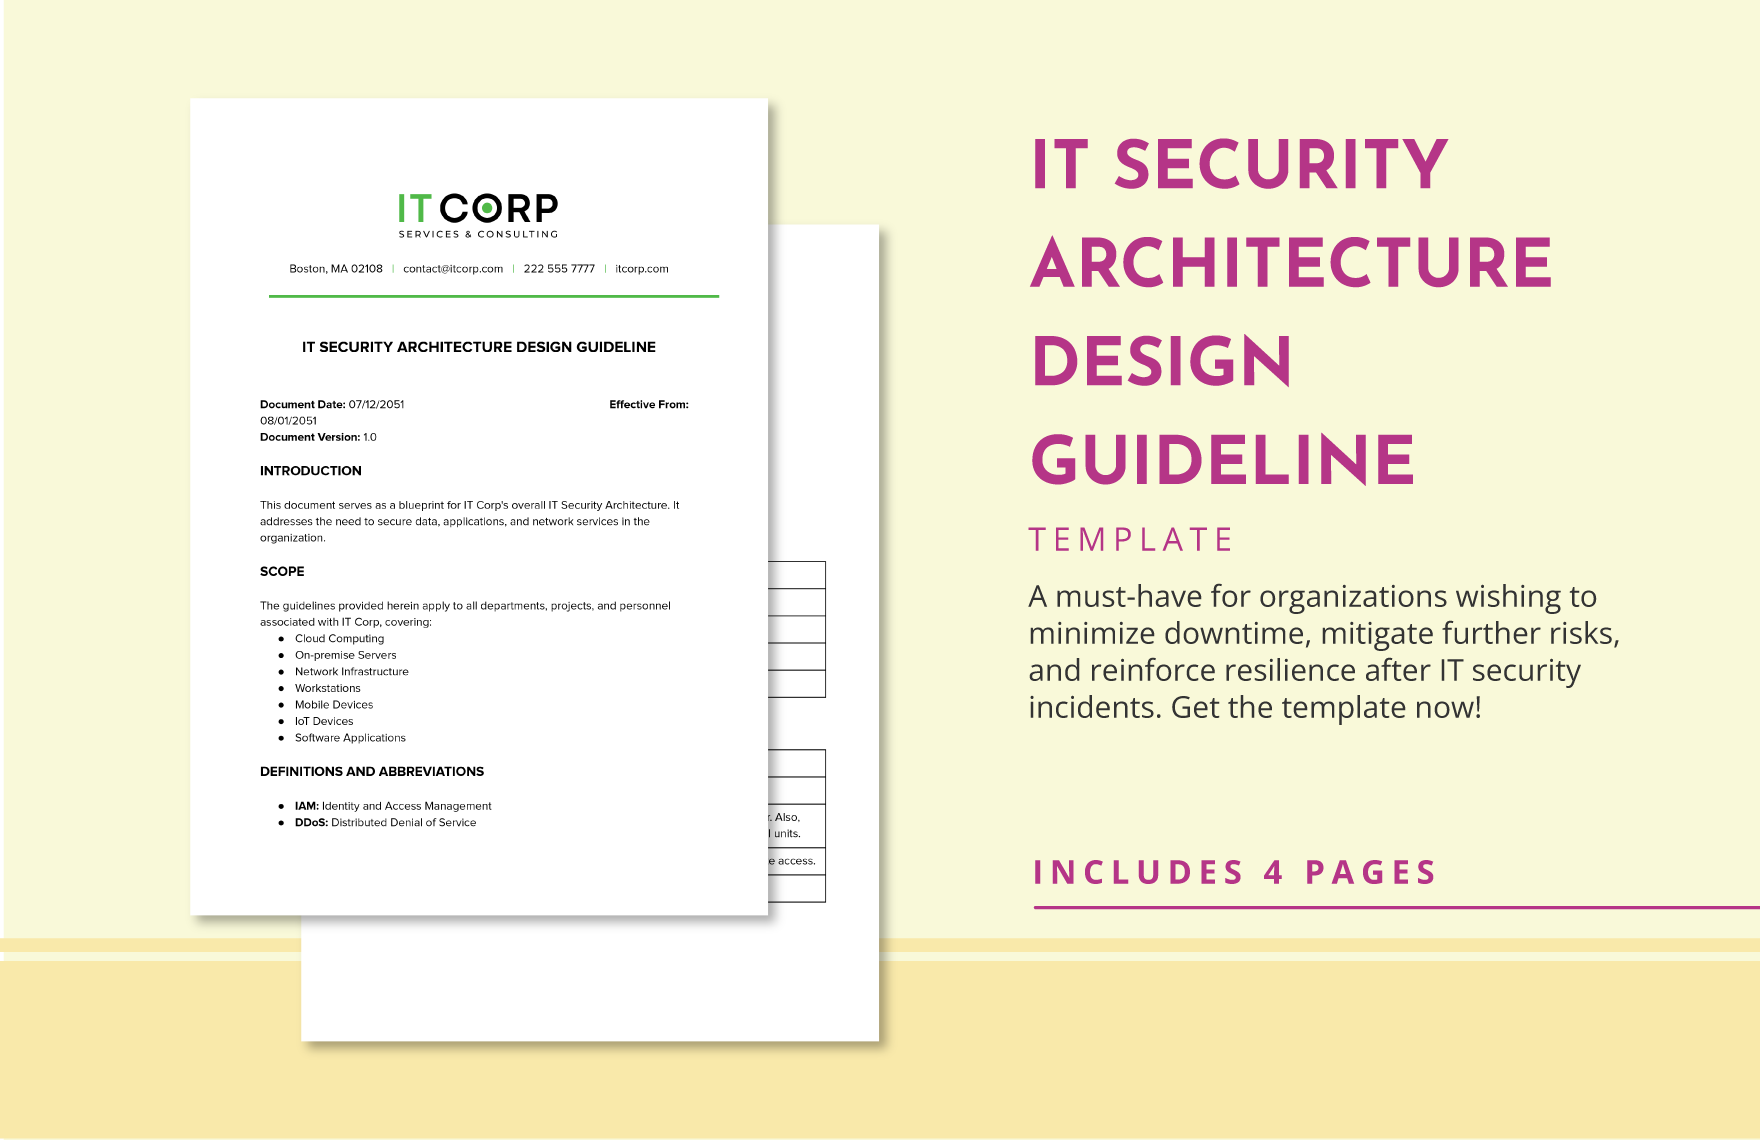 IT Security Architecture Design Guideline